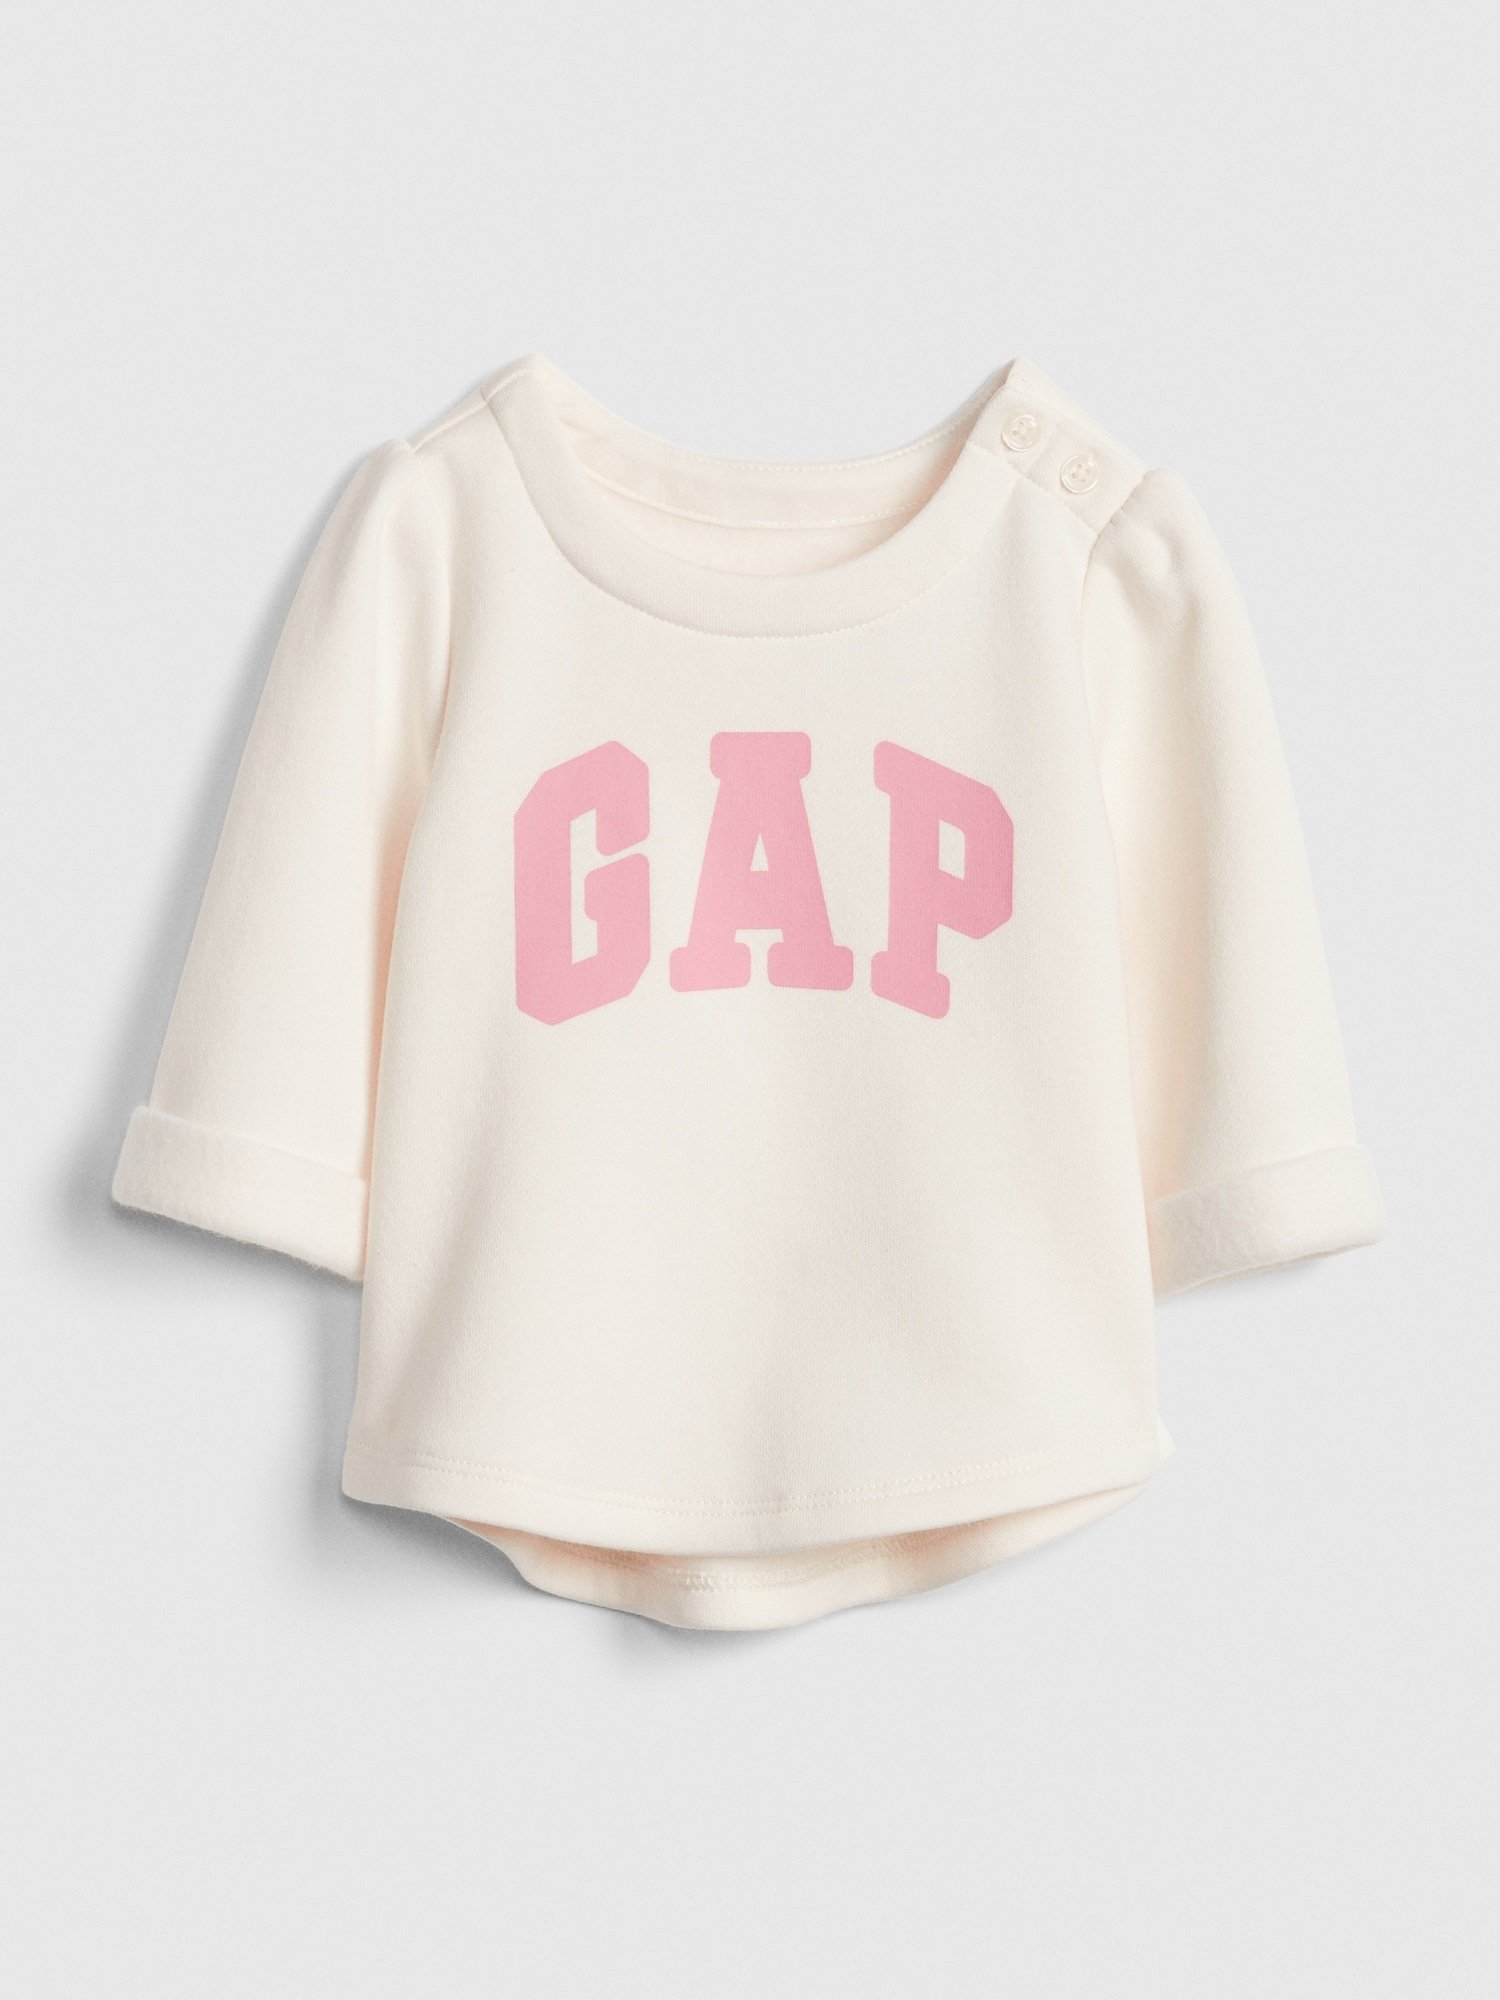 Gap Logo Sıfır Yaka Sweatshirt product image